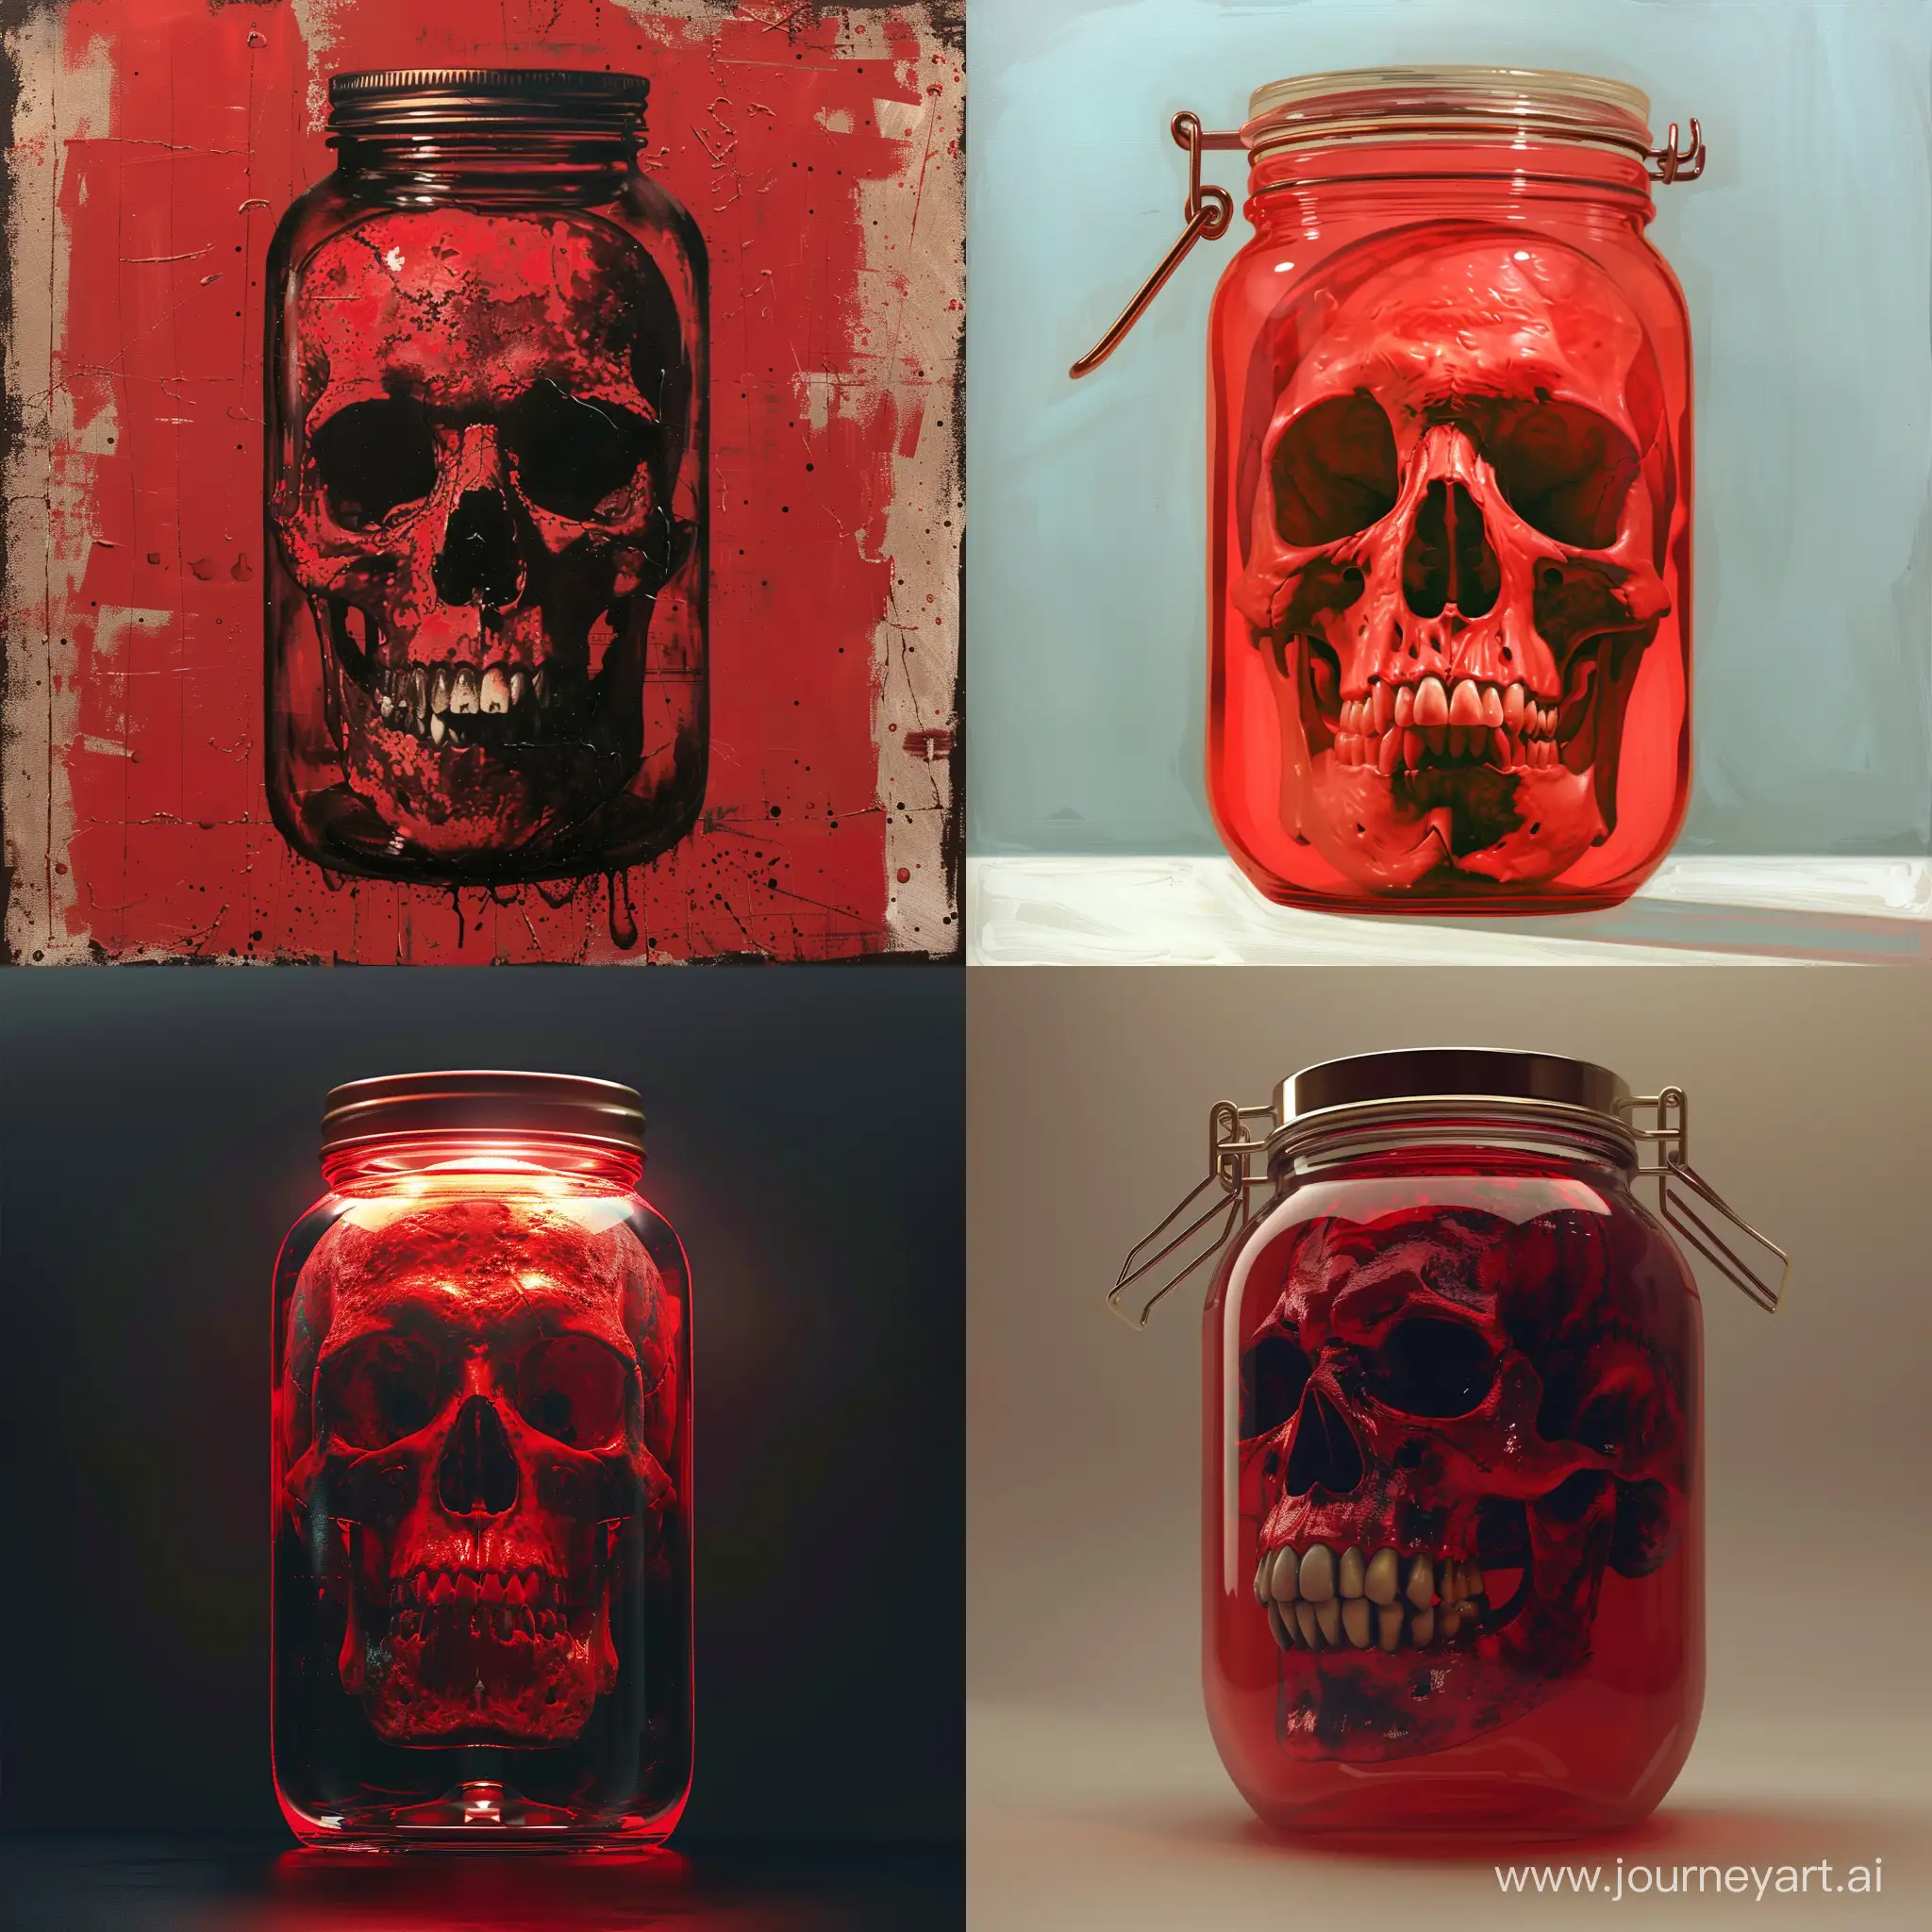 Sinister-Red-Skull-Suspended-in-Glass-Jar